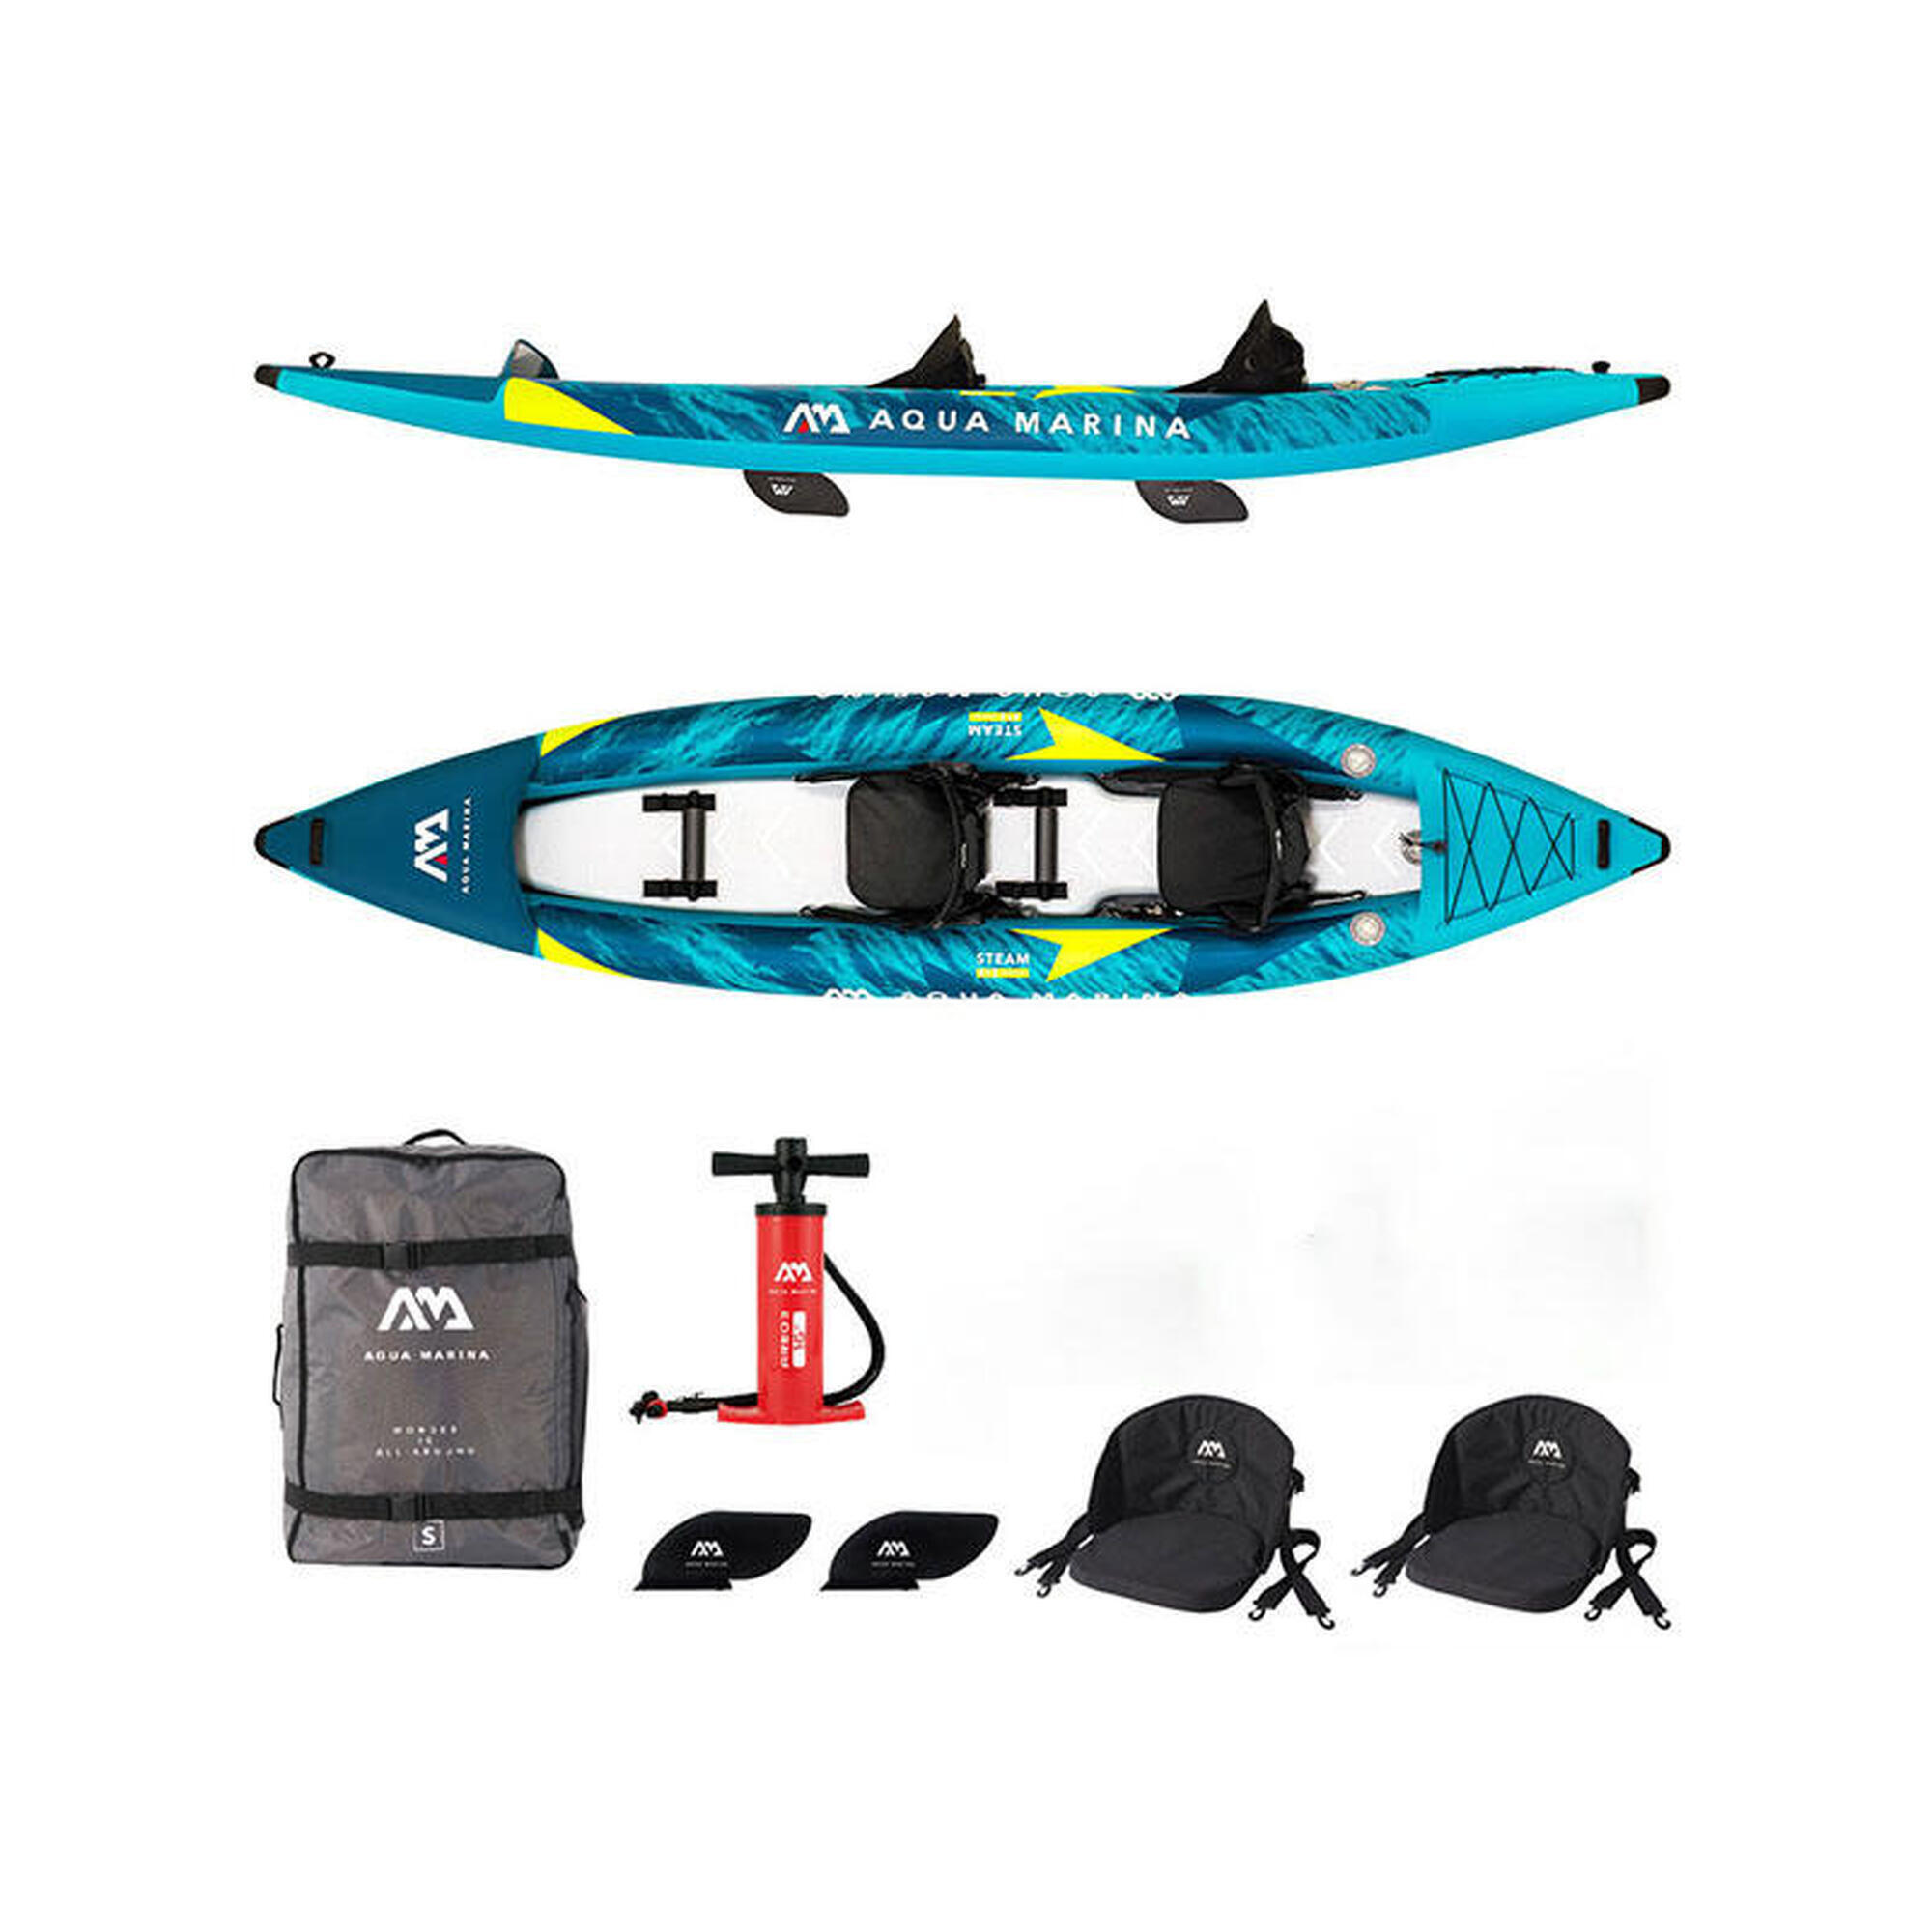 Aqua Marina STEAM 412cm 2 Person Inflatable Kayak Package 1/7